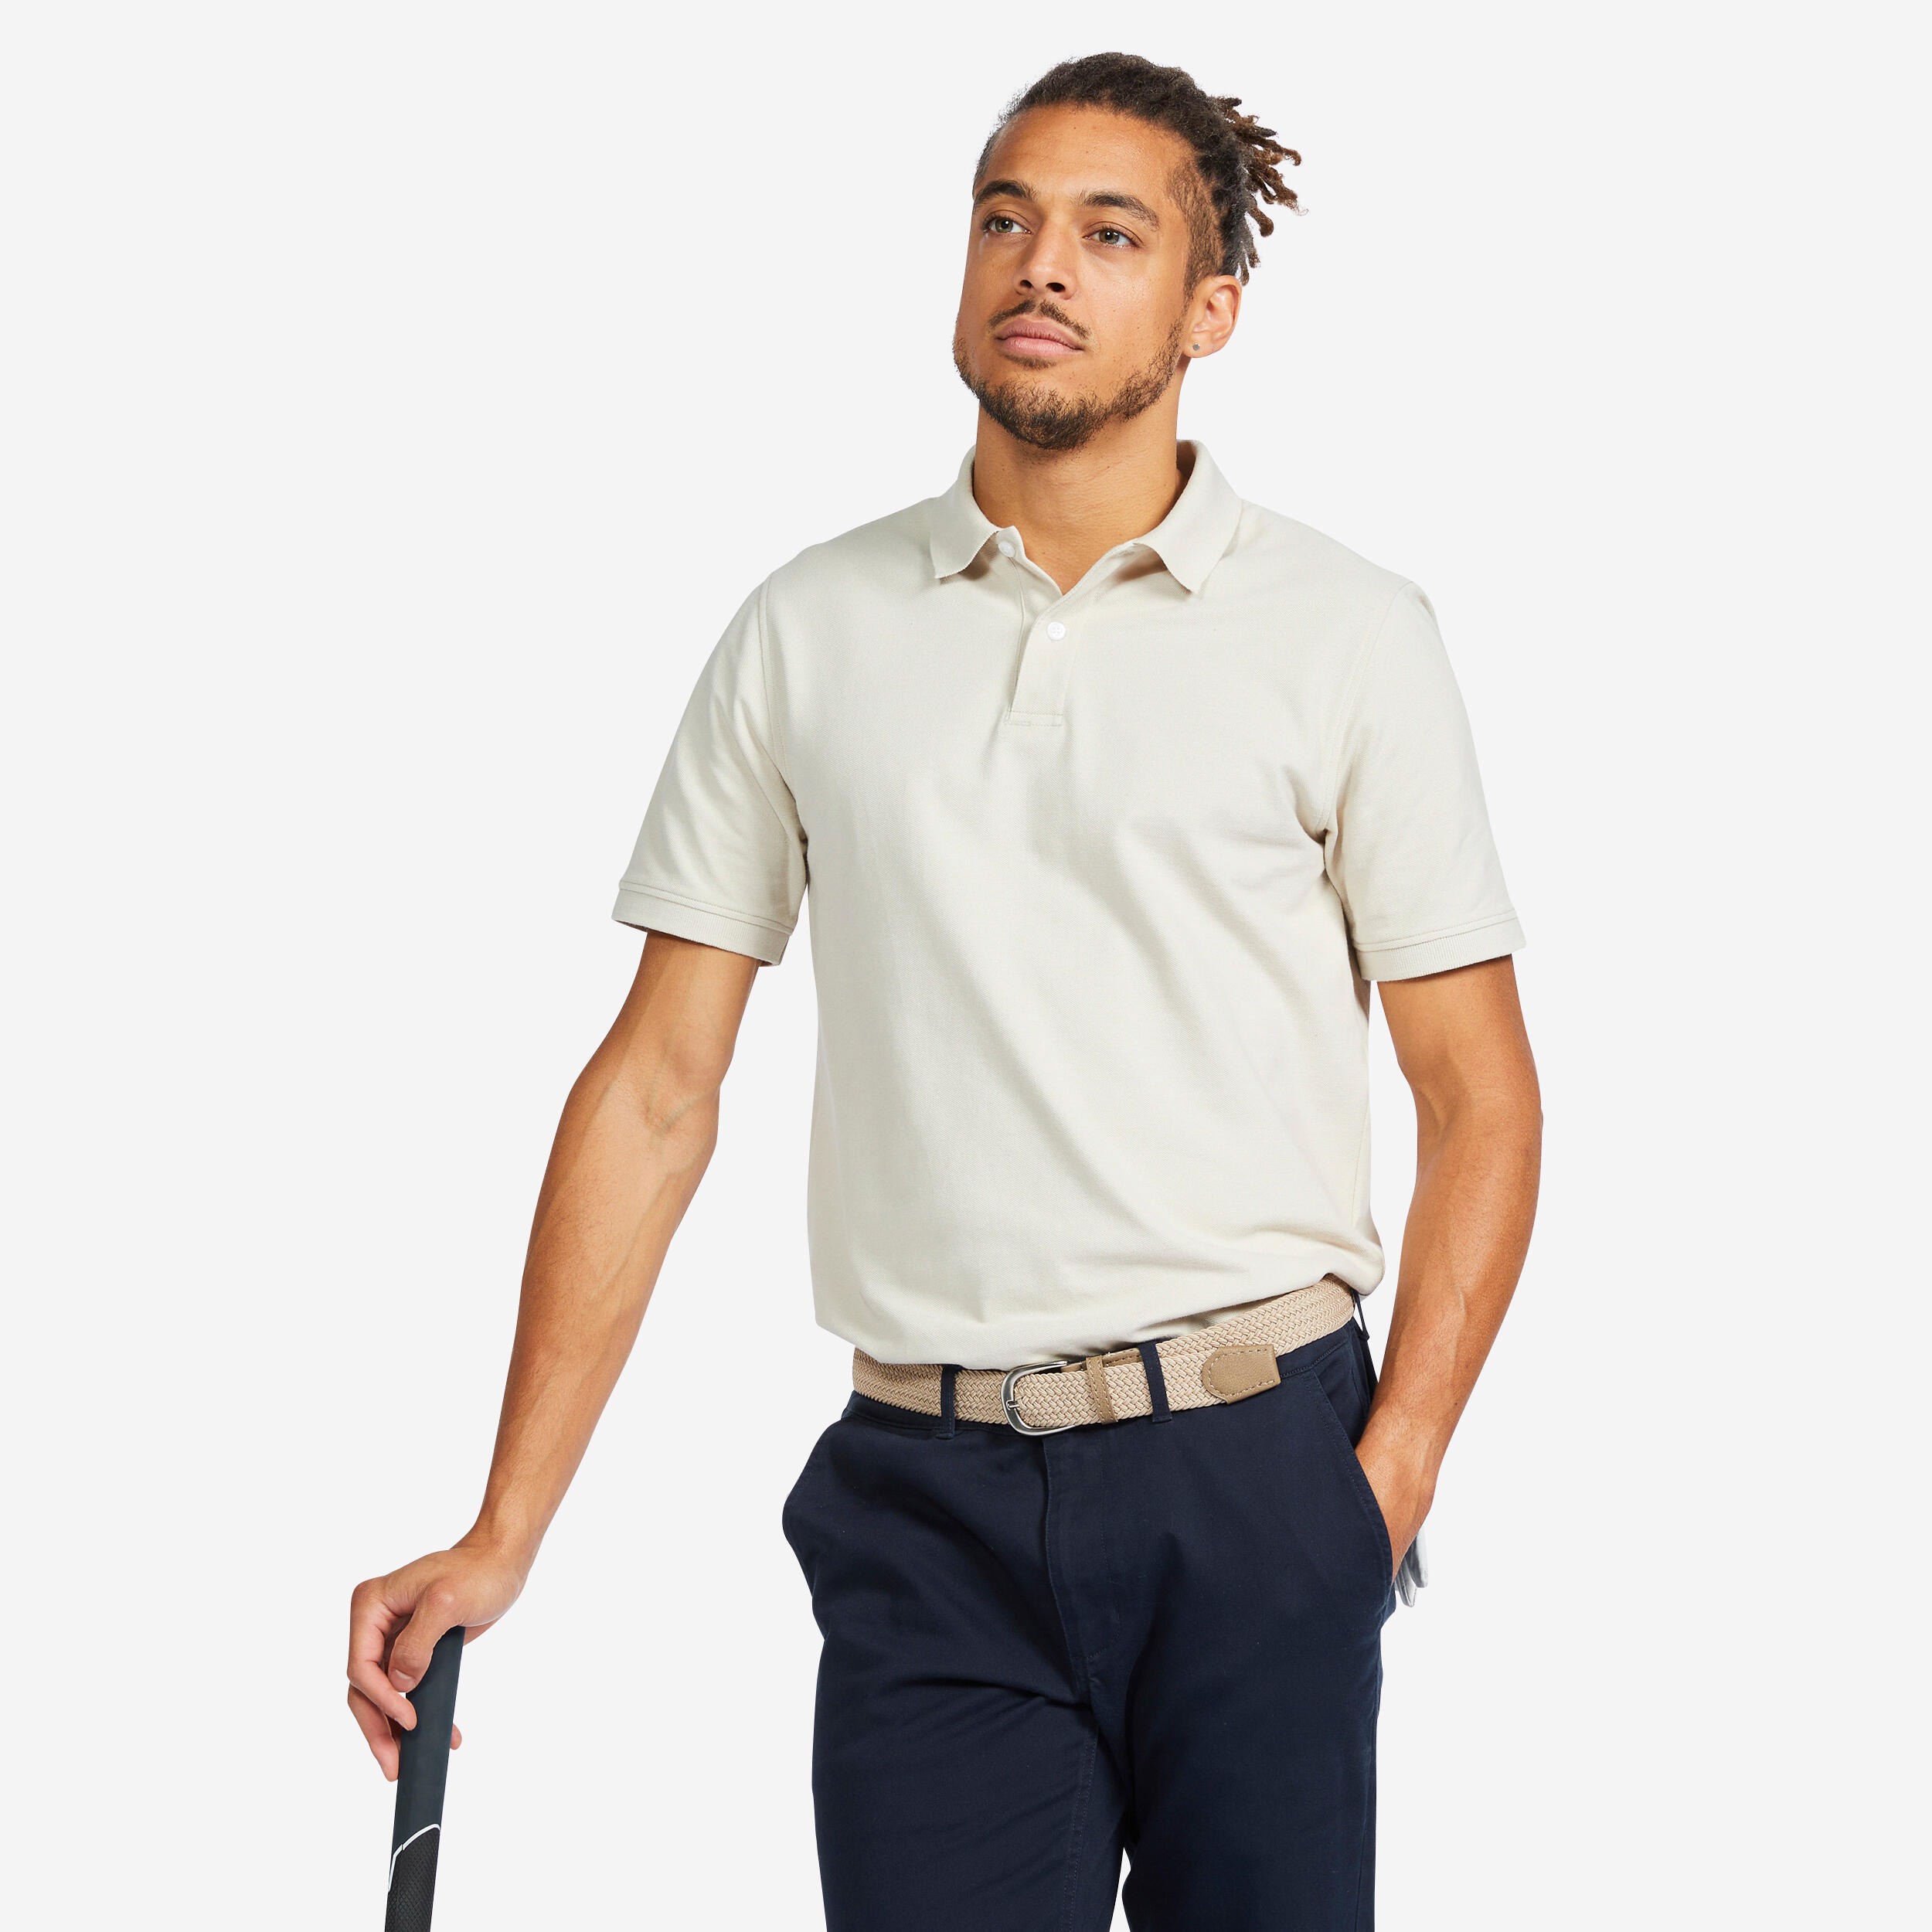 INESIS Men's short-sleeved golf polo shirt - MW500 linen